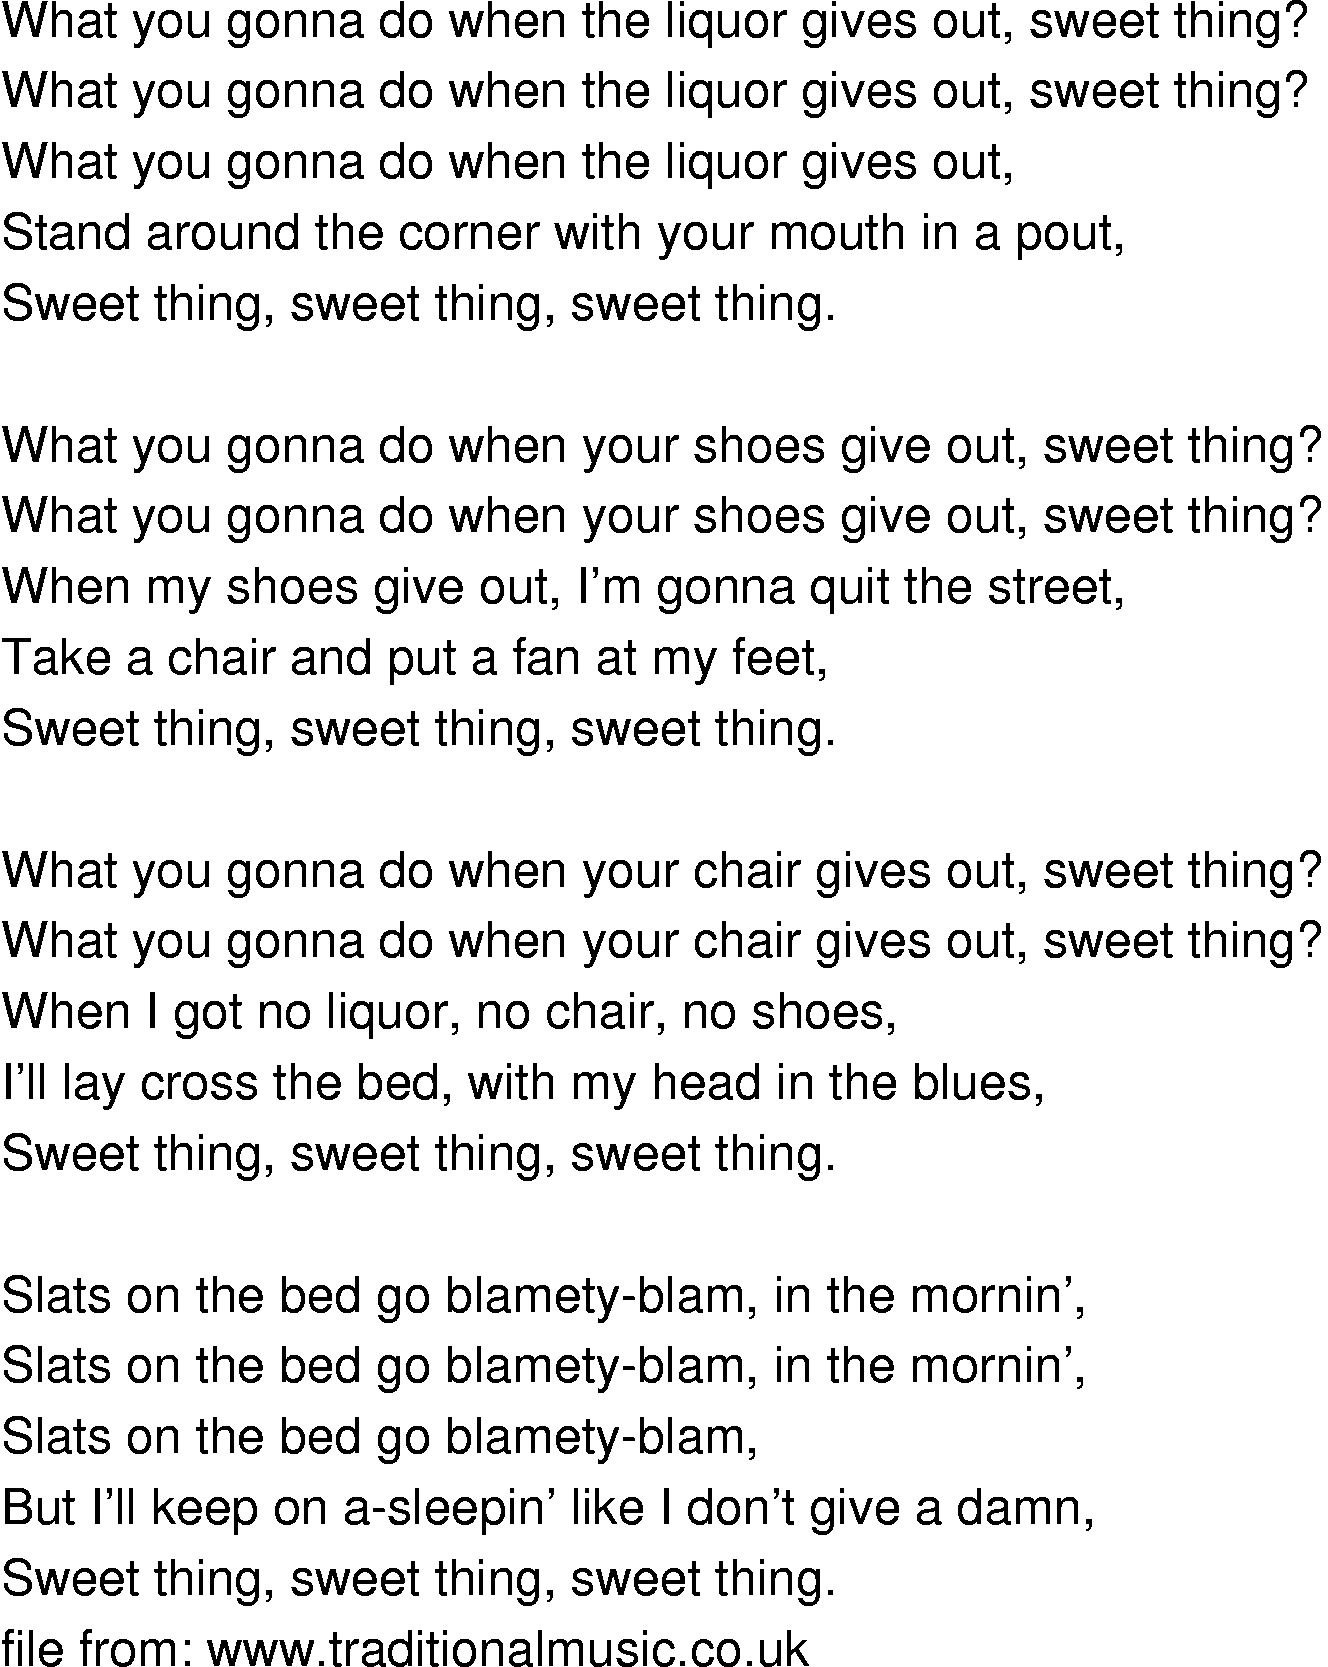 Old-Time (oldtimey) Song Lyrics - sweet thing